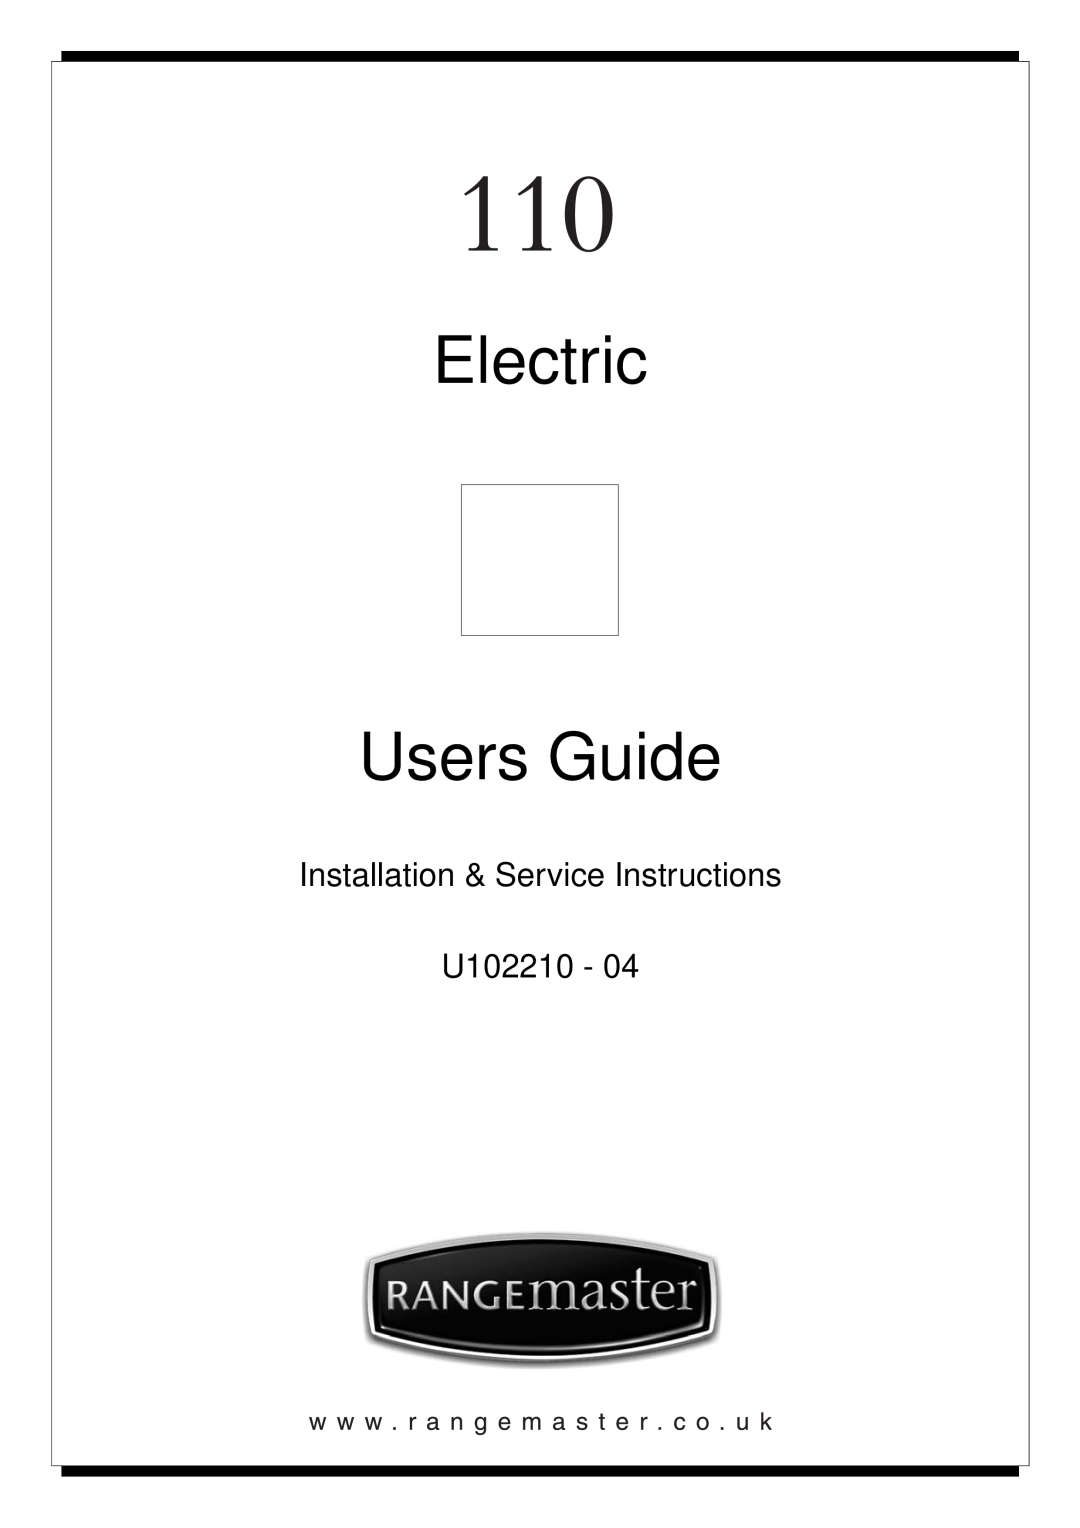 Rangemaster U102210-04 manual Electric Users Guide, Installation & Service Instructions U102210 